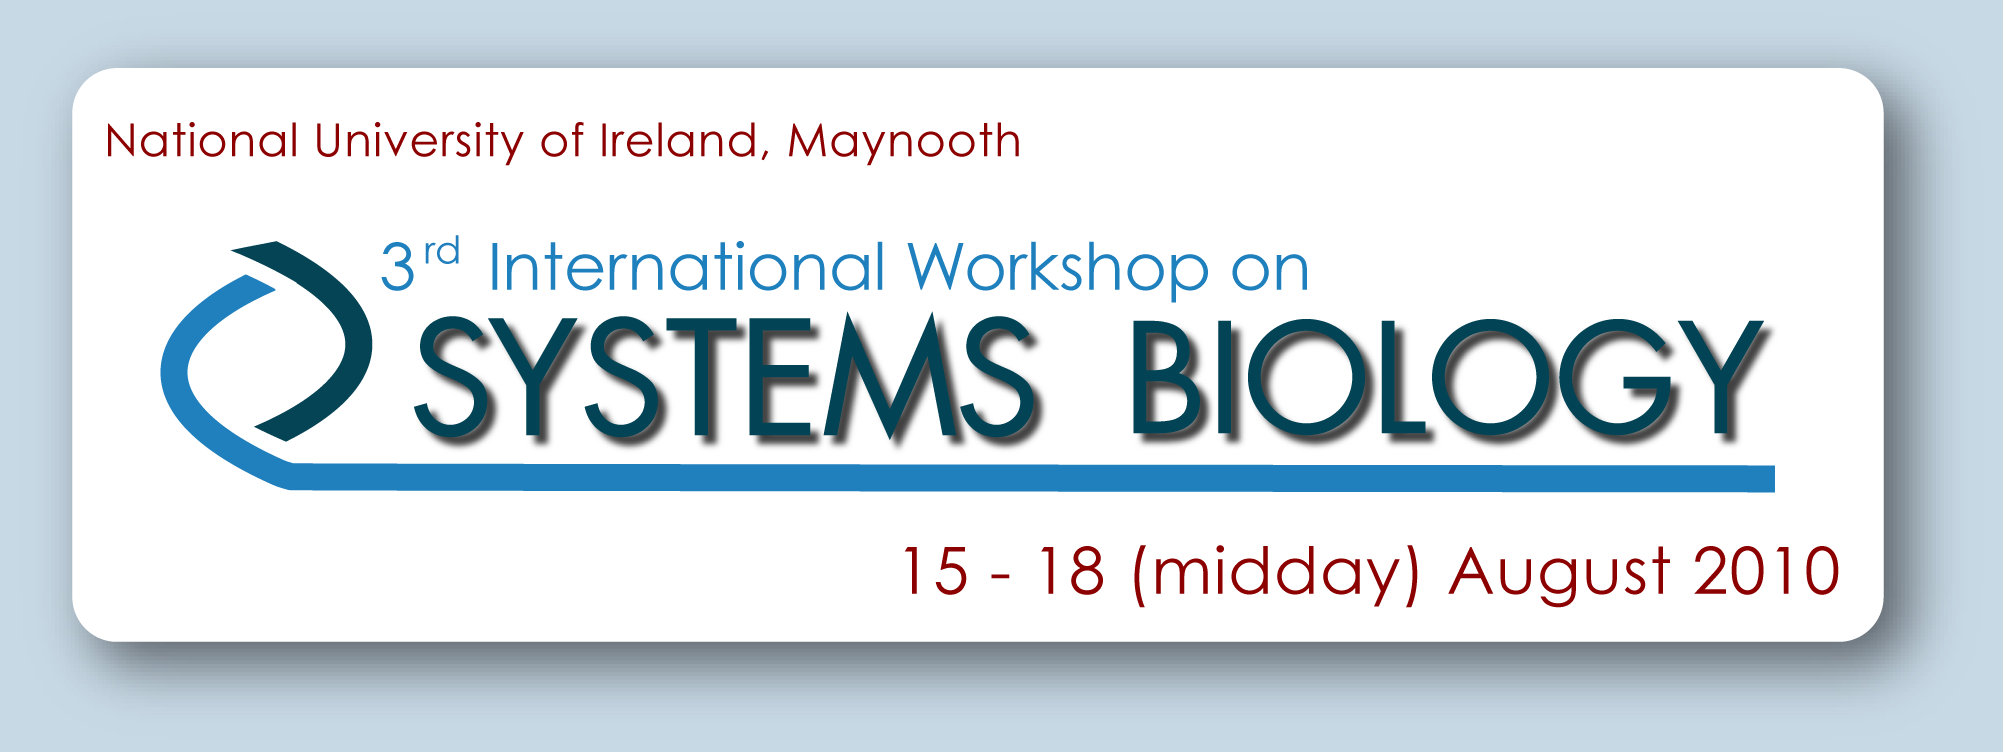 3rd International Workshop on Systems Biology